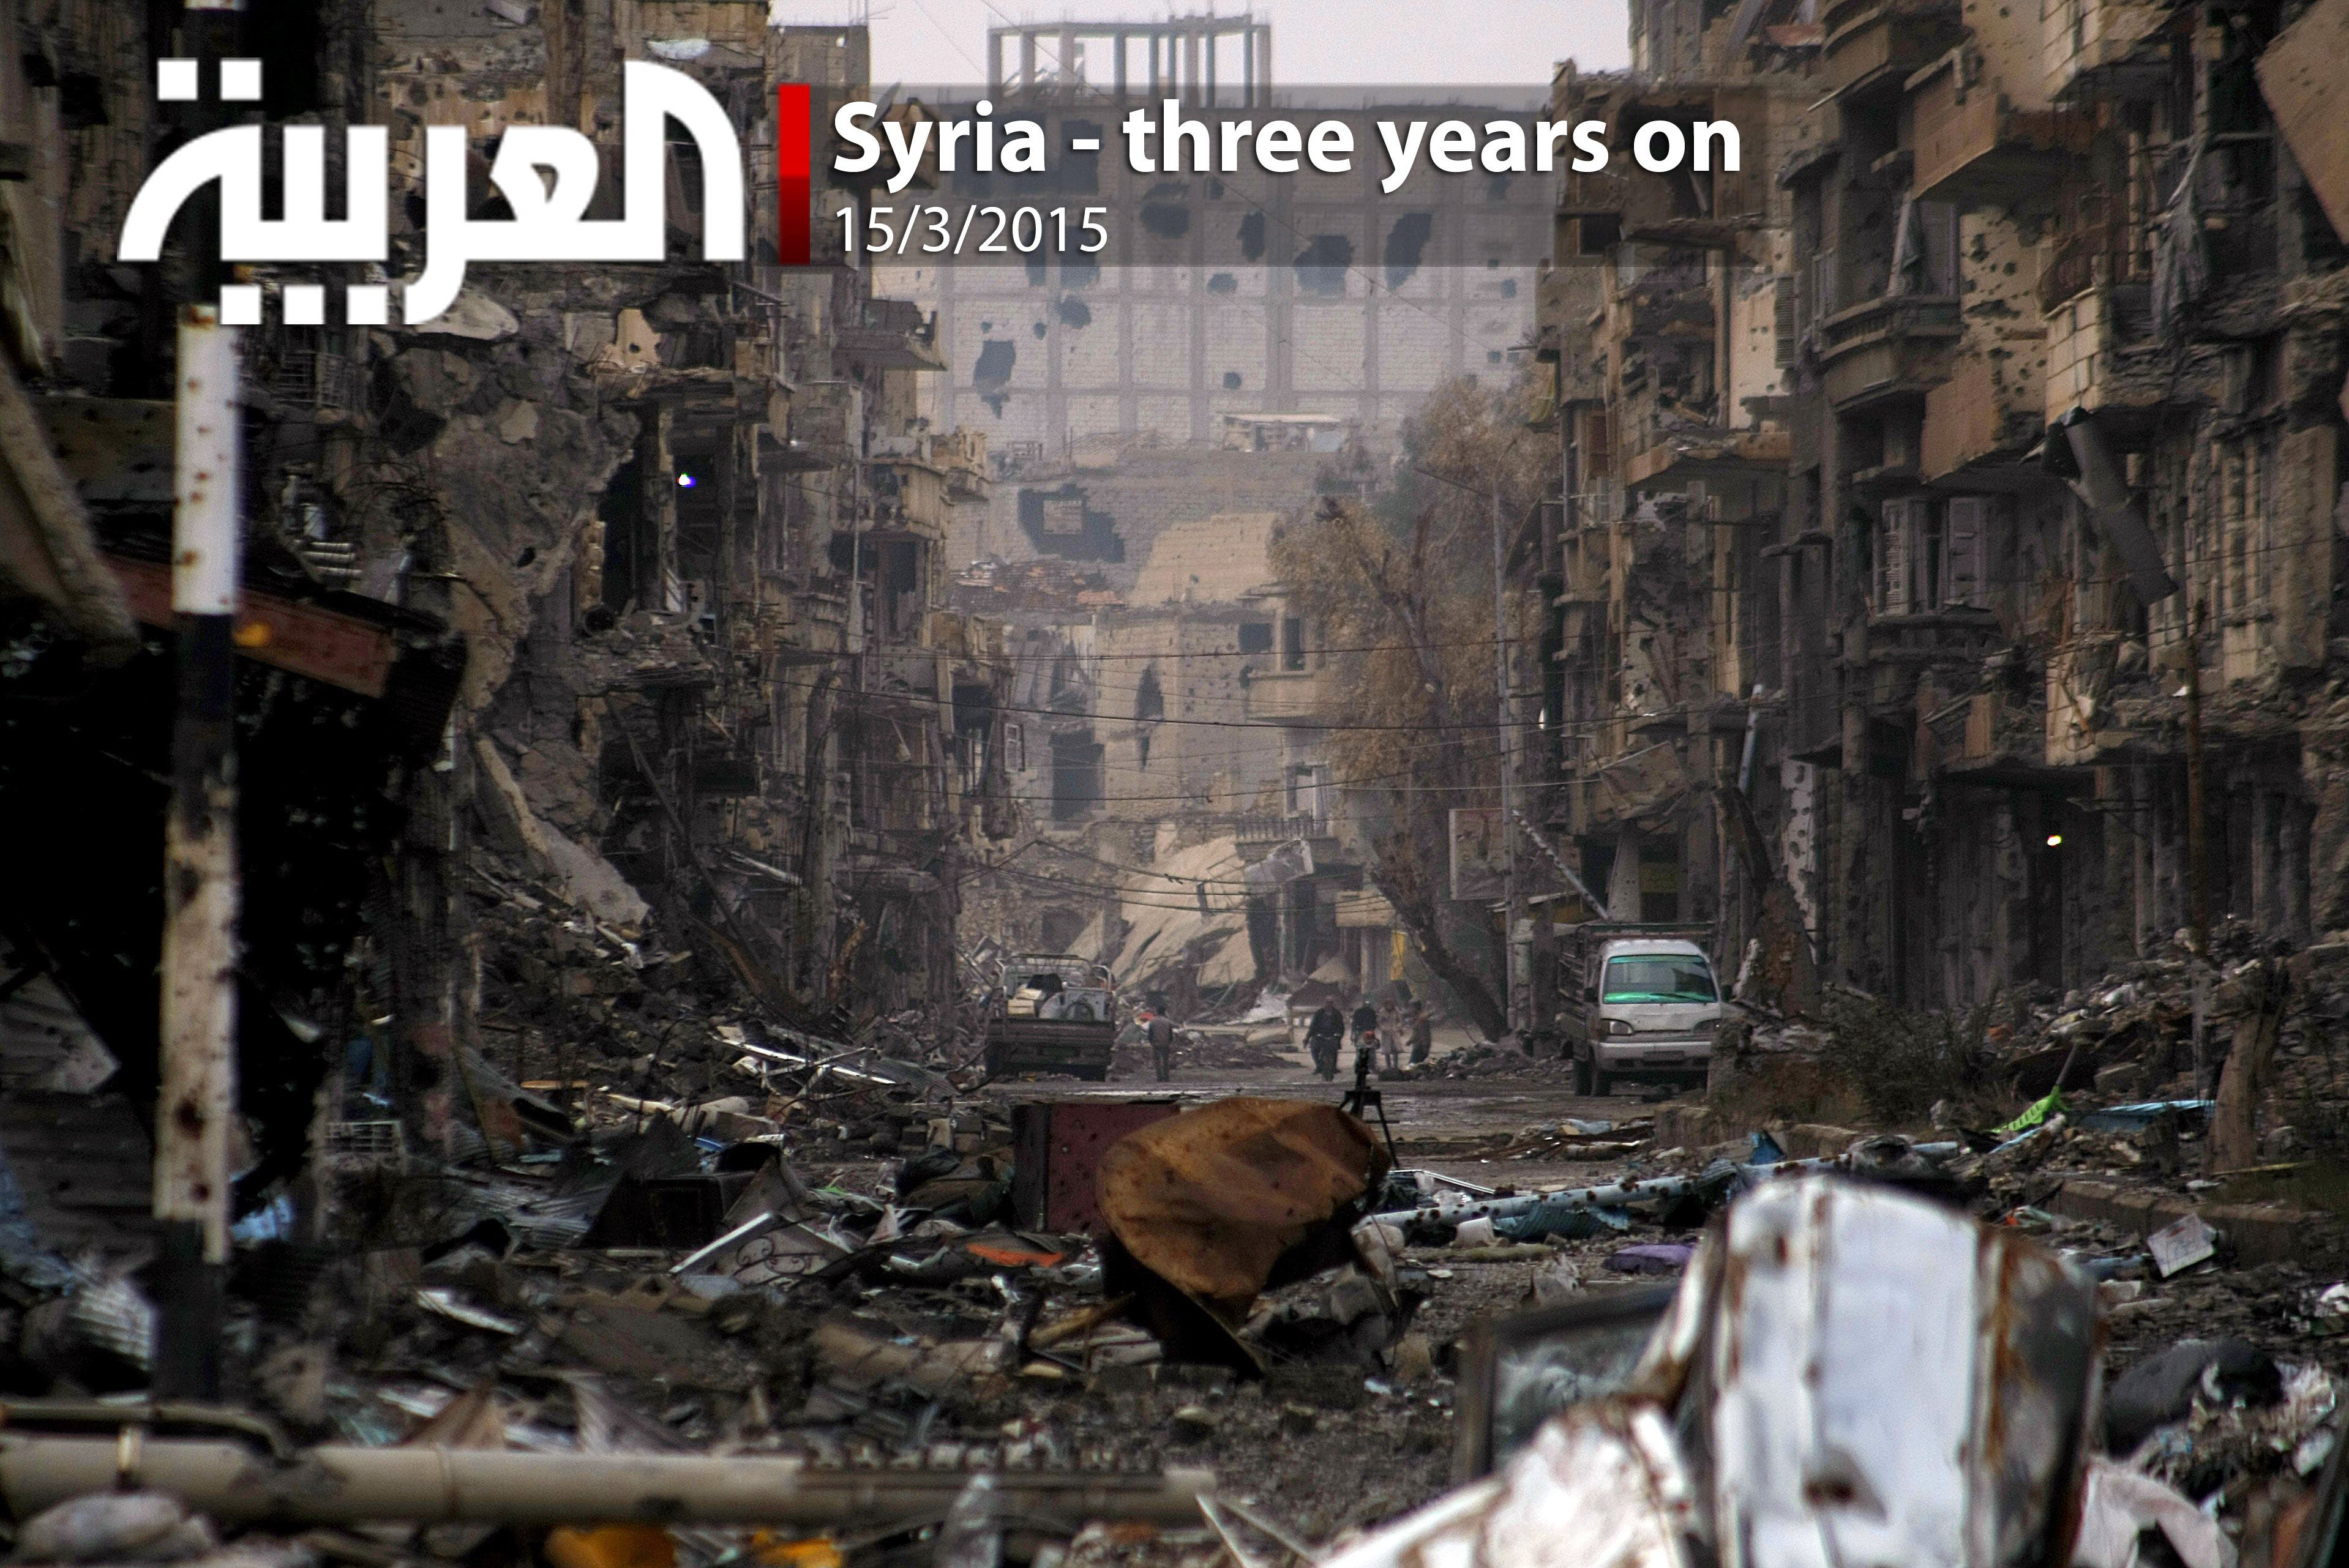 Syria - three years on